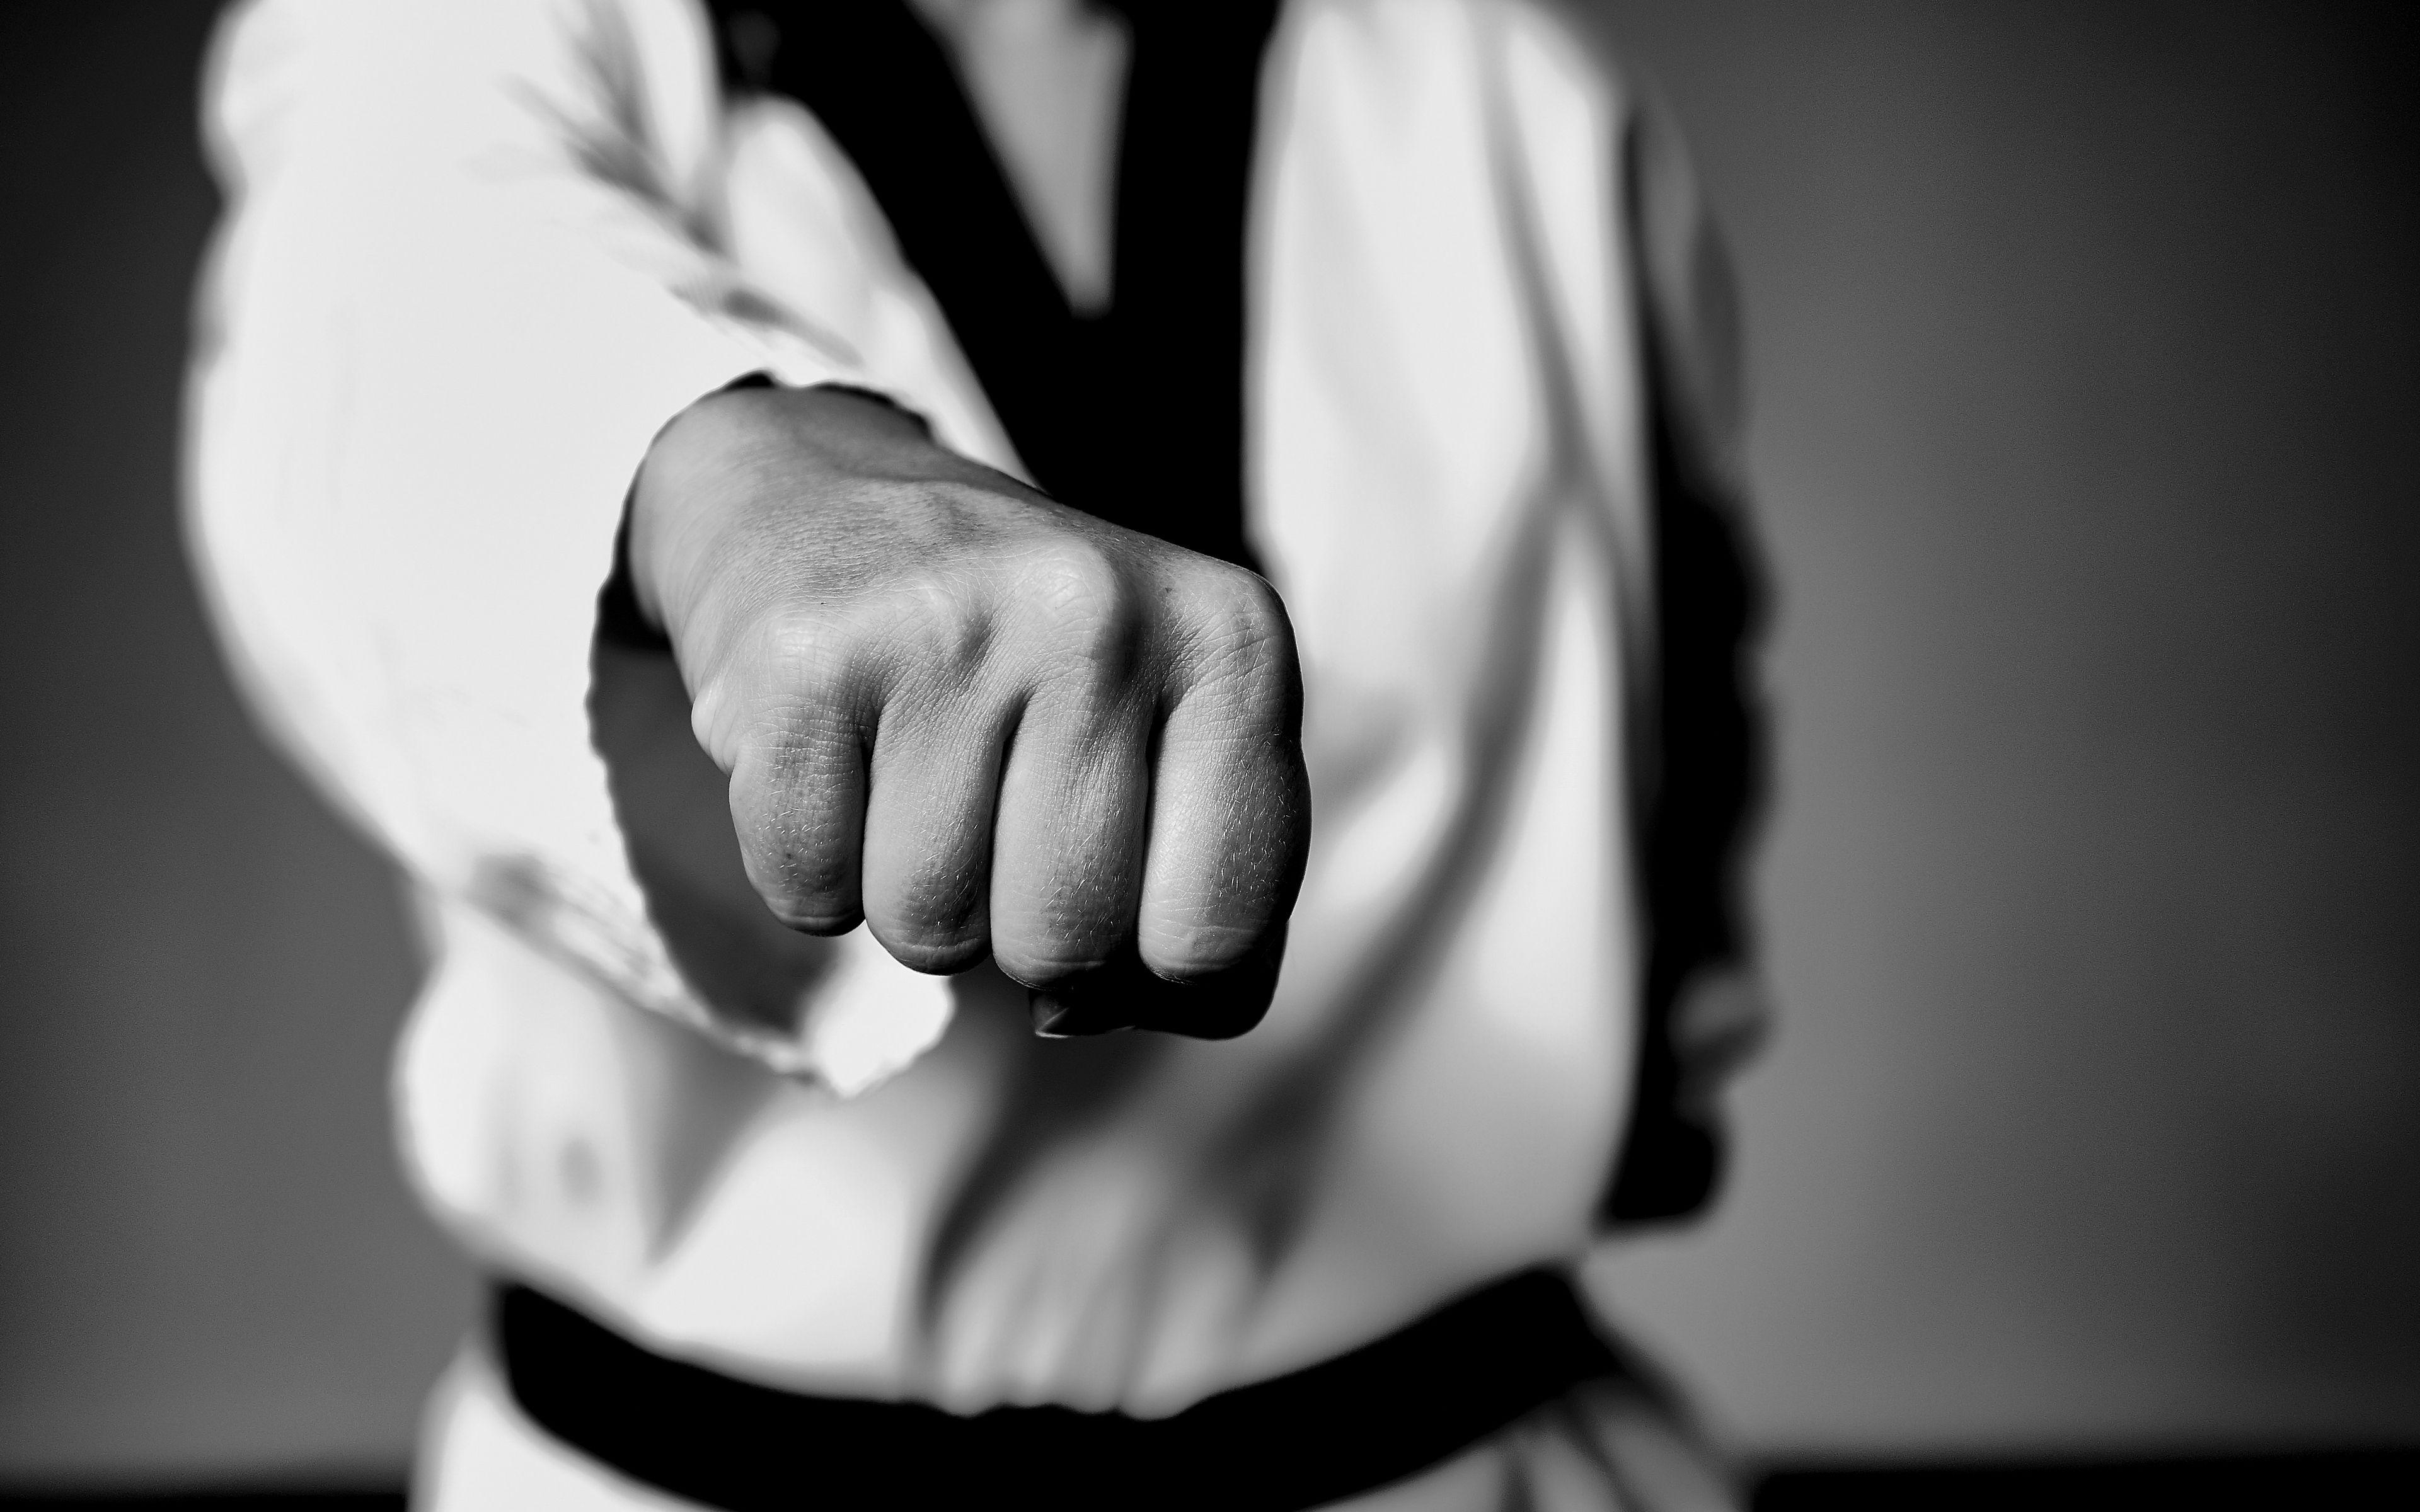 karate black belt wallpaper